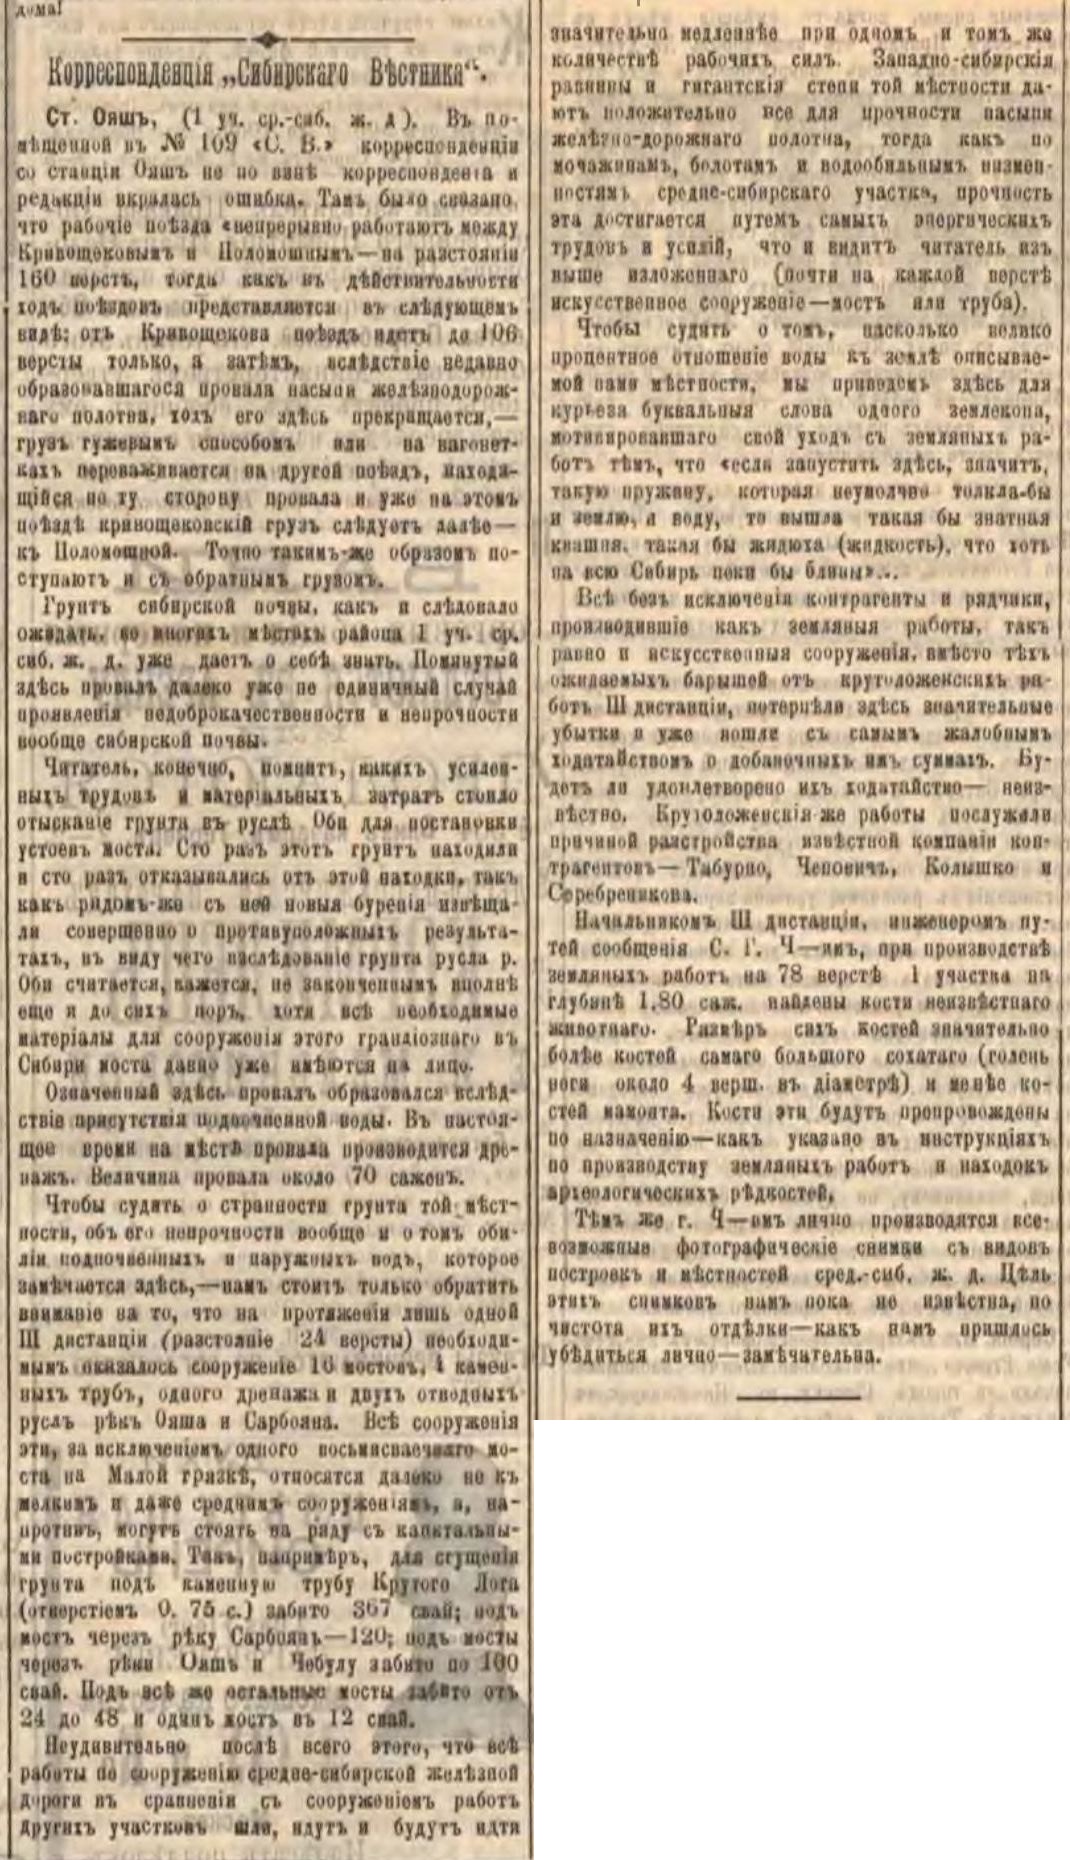 Сибирский вестник №112 25 сентября 1894